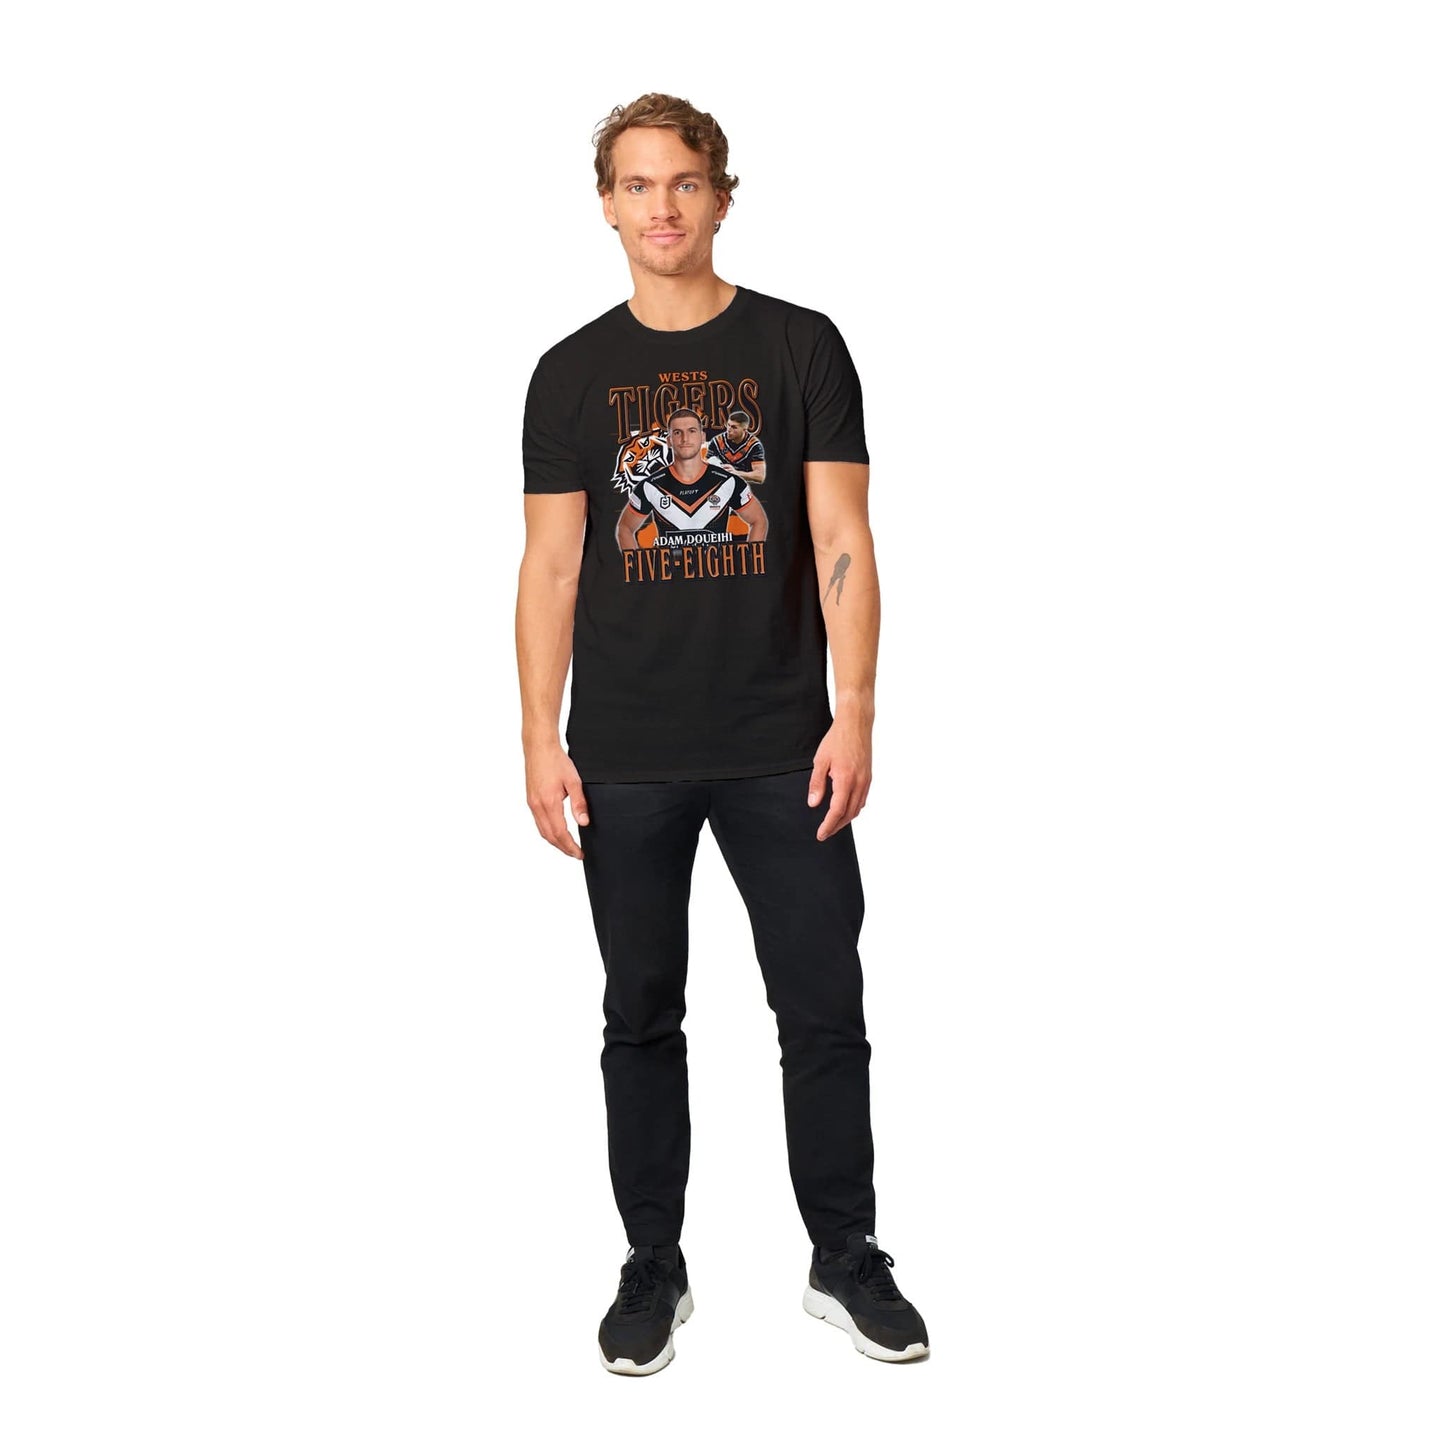 Adam Doueihi Wests Tigers T-shirt Australia Online Color